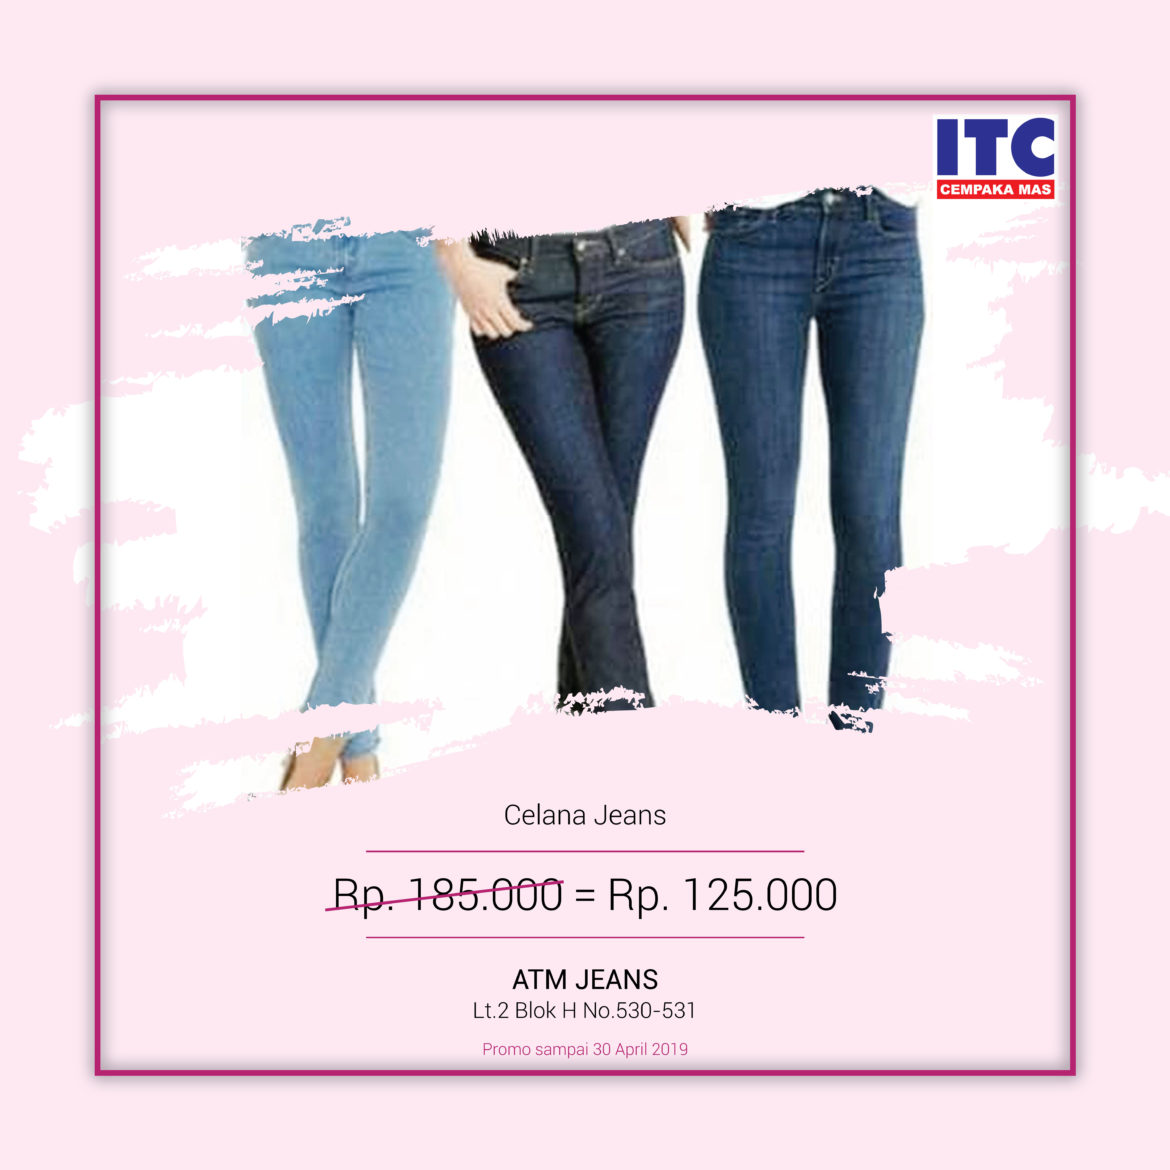 discount 60rb pembelian celana  jeans  di ATM jeans  ITC  